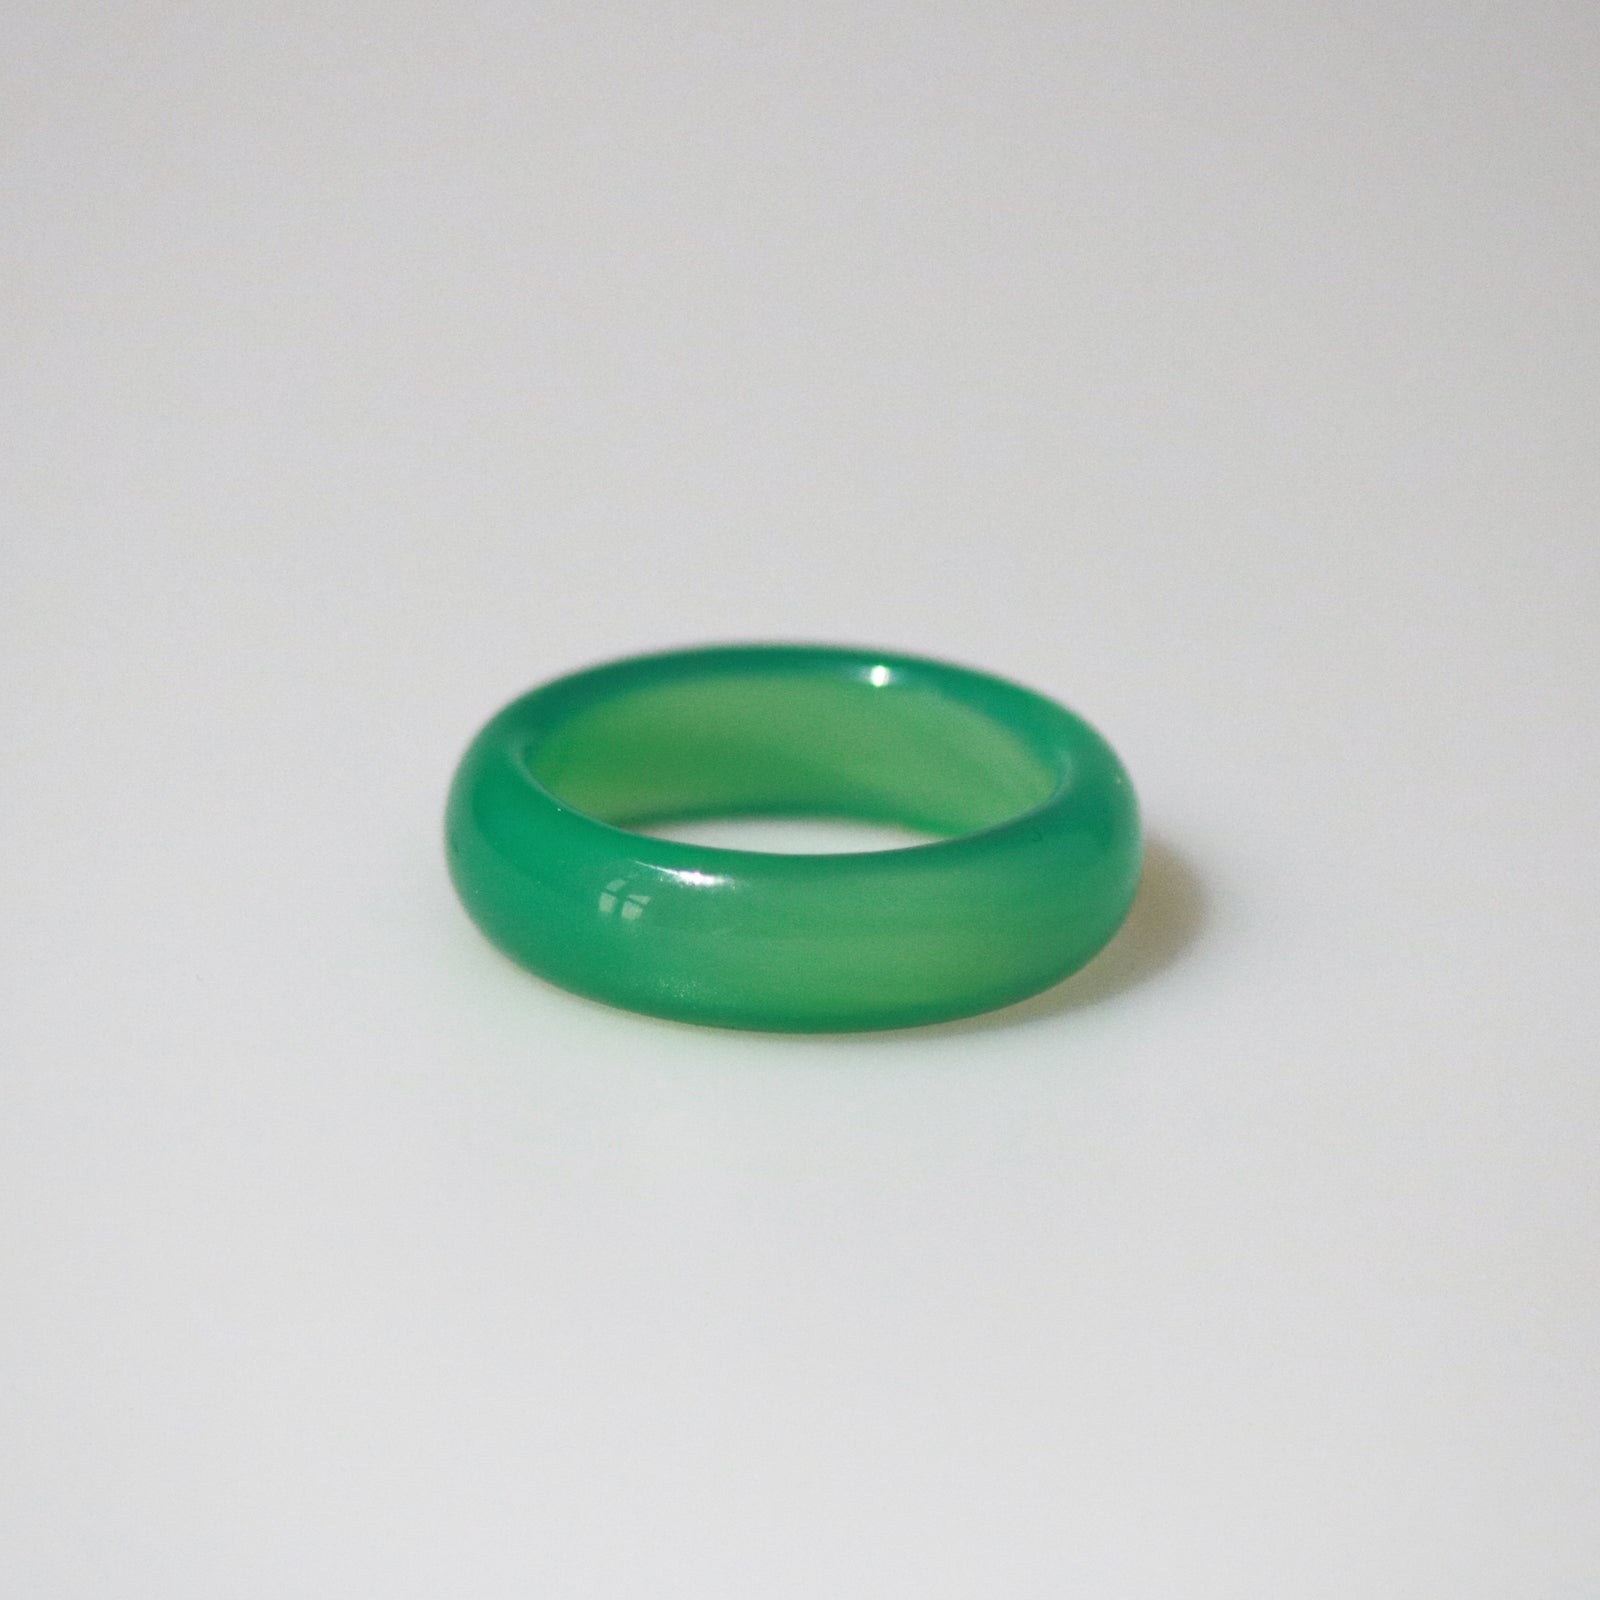 Meideya Jewelry Grass Green Jade Band Ring